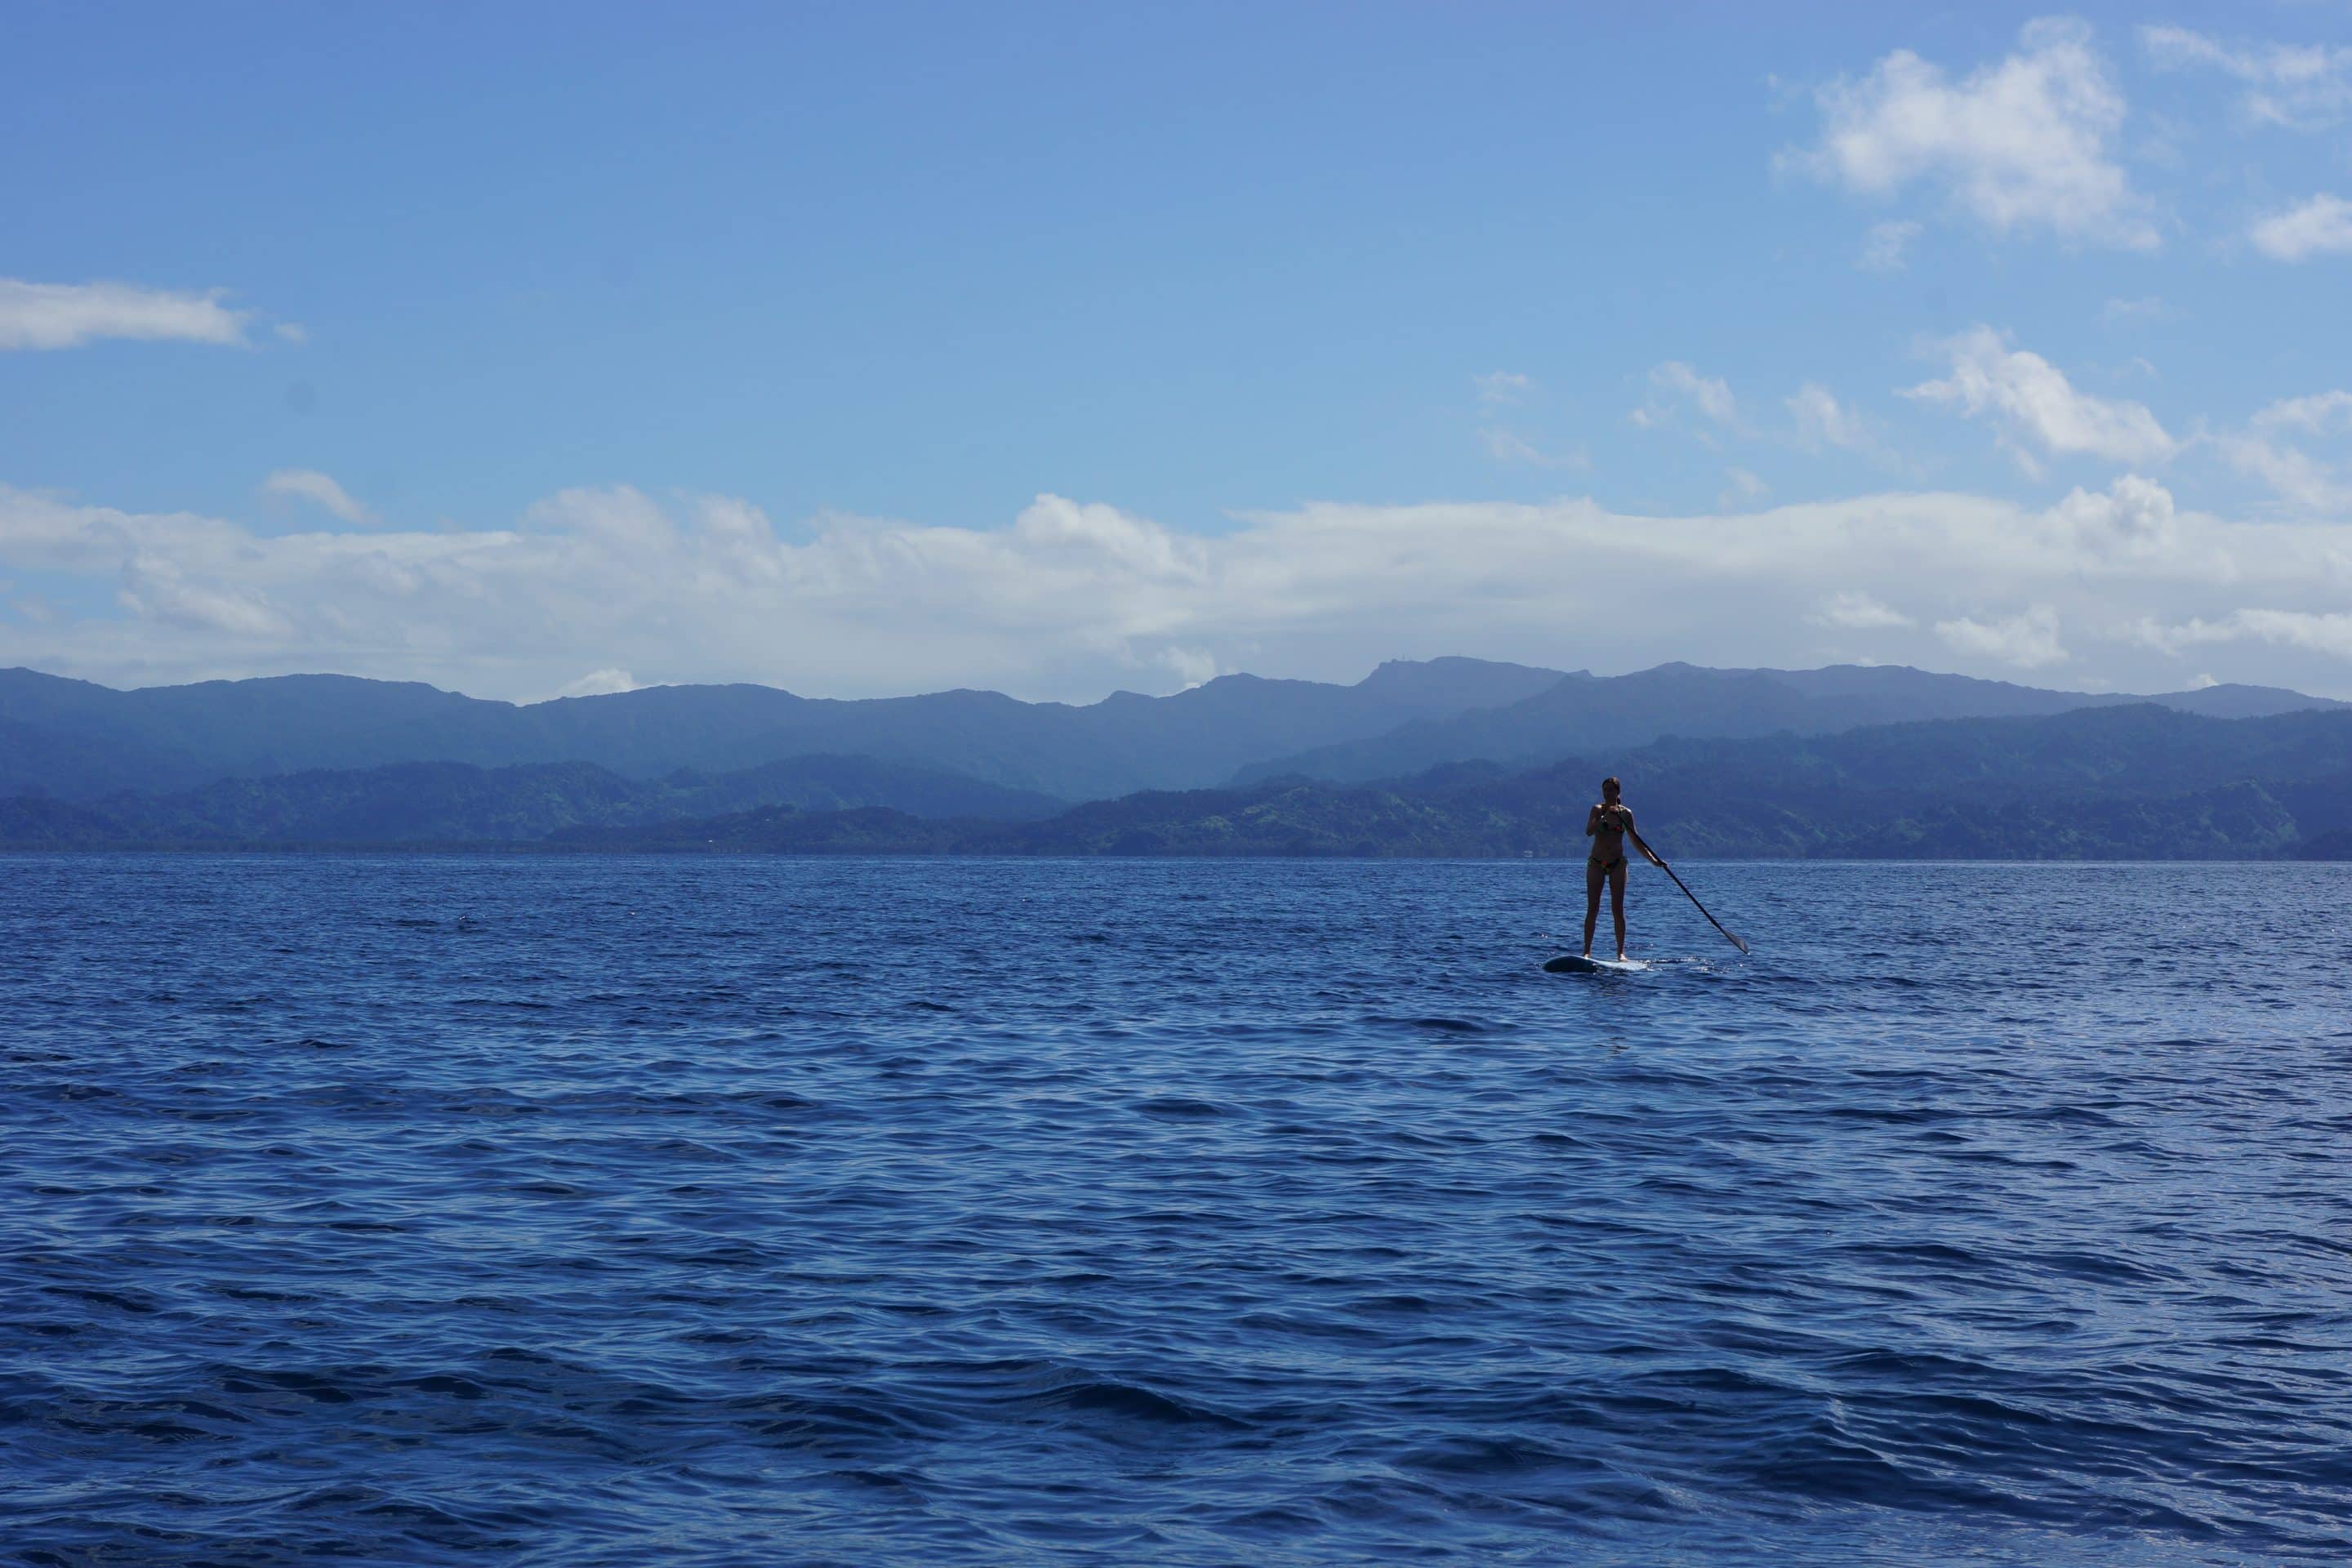 paddle boarding off the coast of Fiji